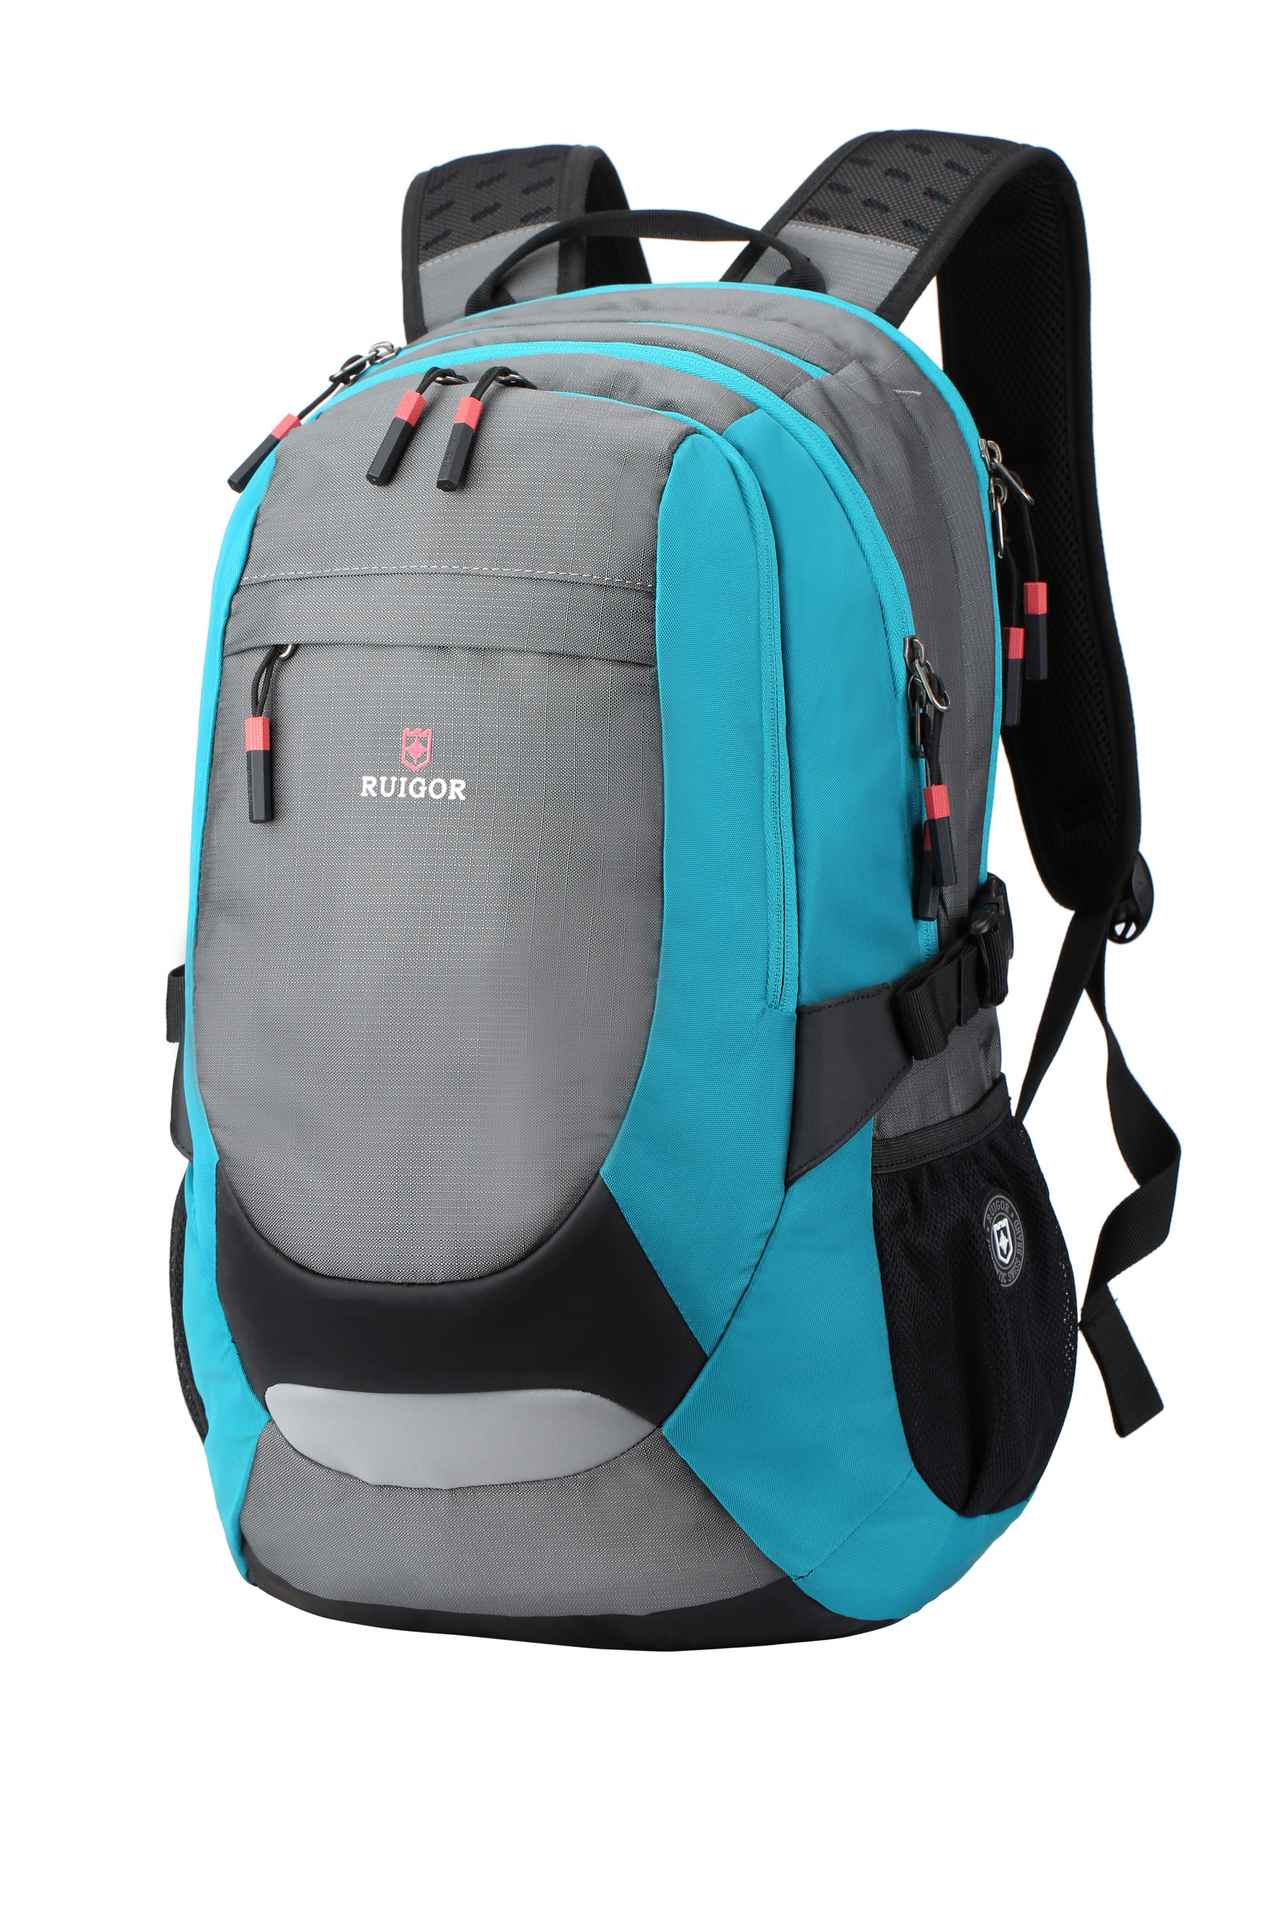 RUIGOR ACTIVE 29 Laptop Backpack Blue Grey